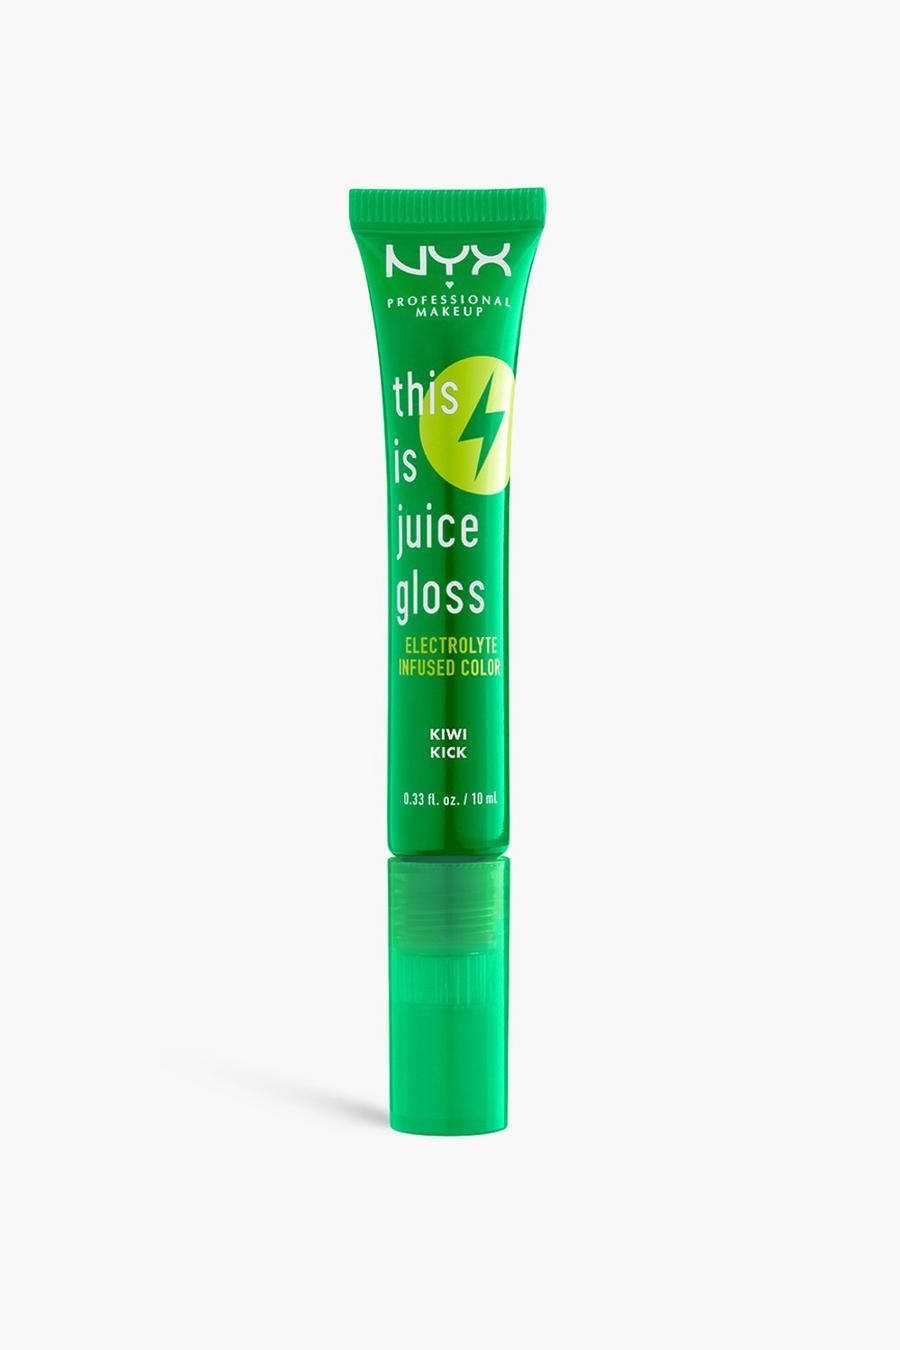 NYX Professional Makeup - Gloss - This Is Juice, 08 kiwi kick image number 1